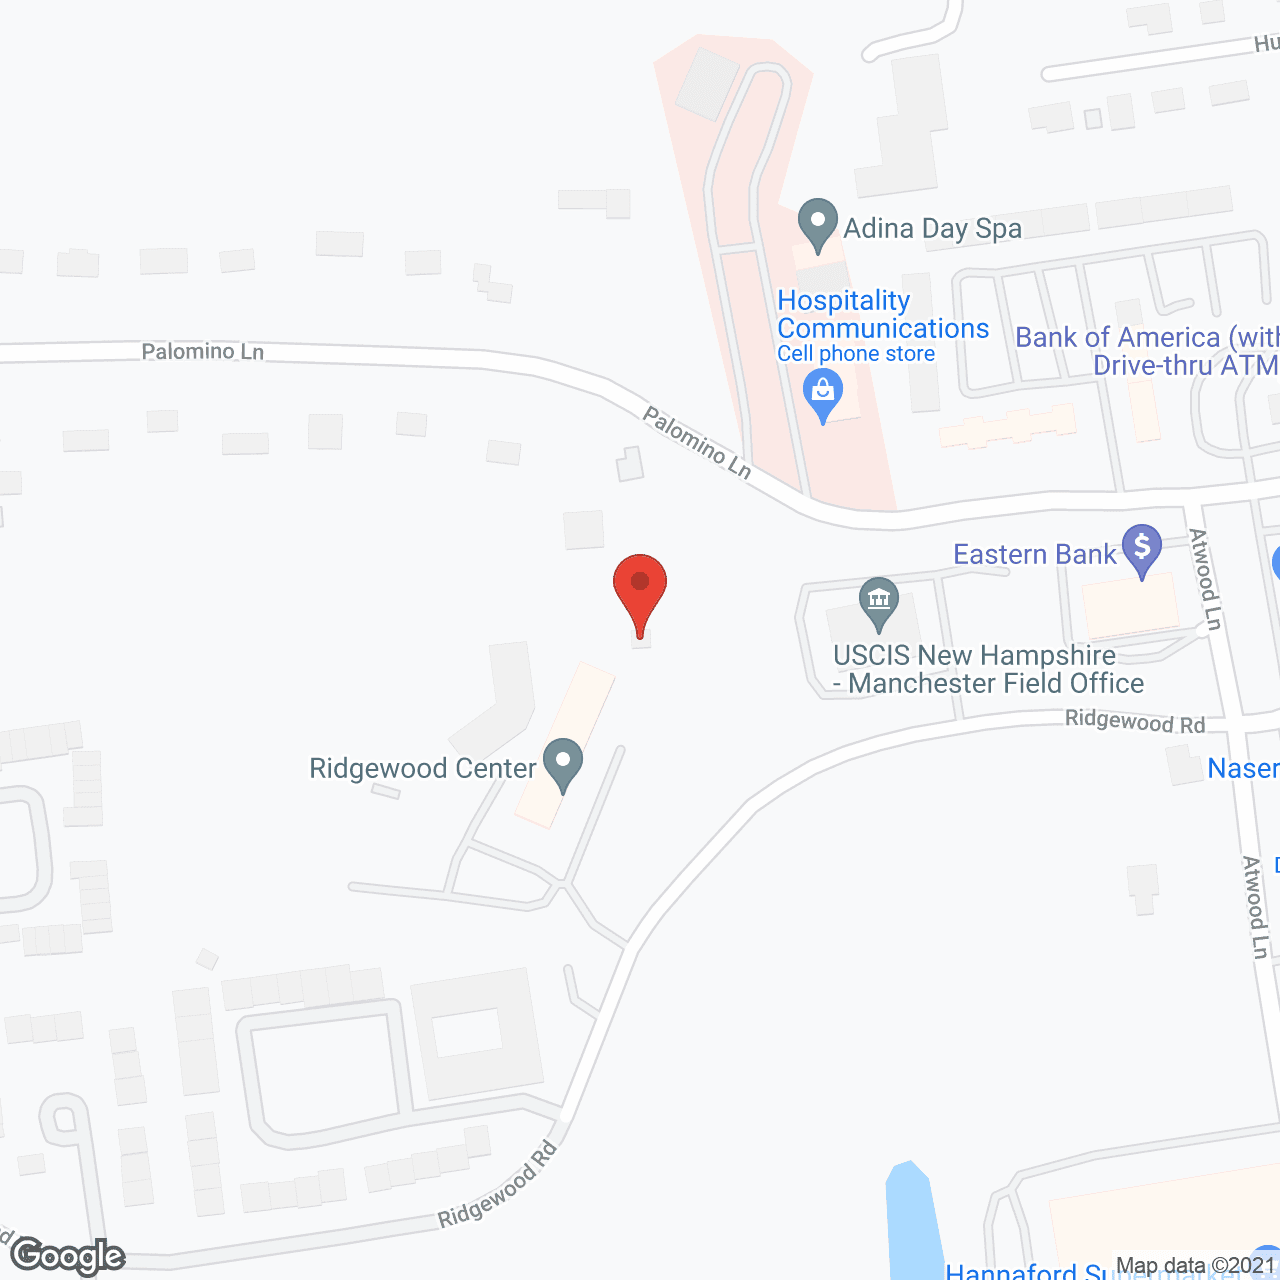 Ridgewood Center in google map